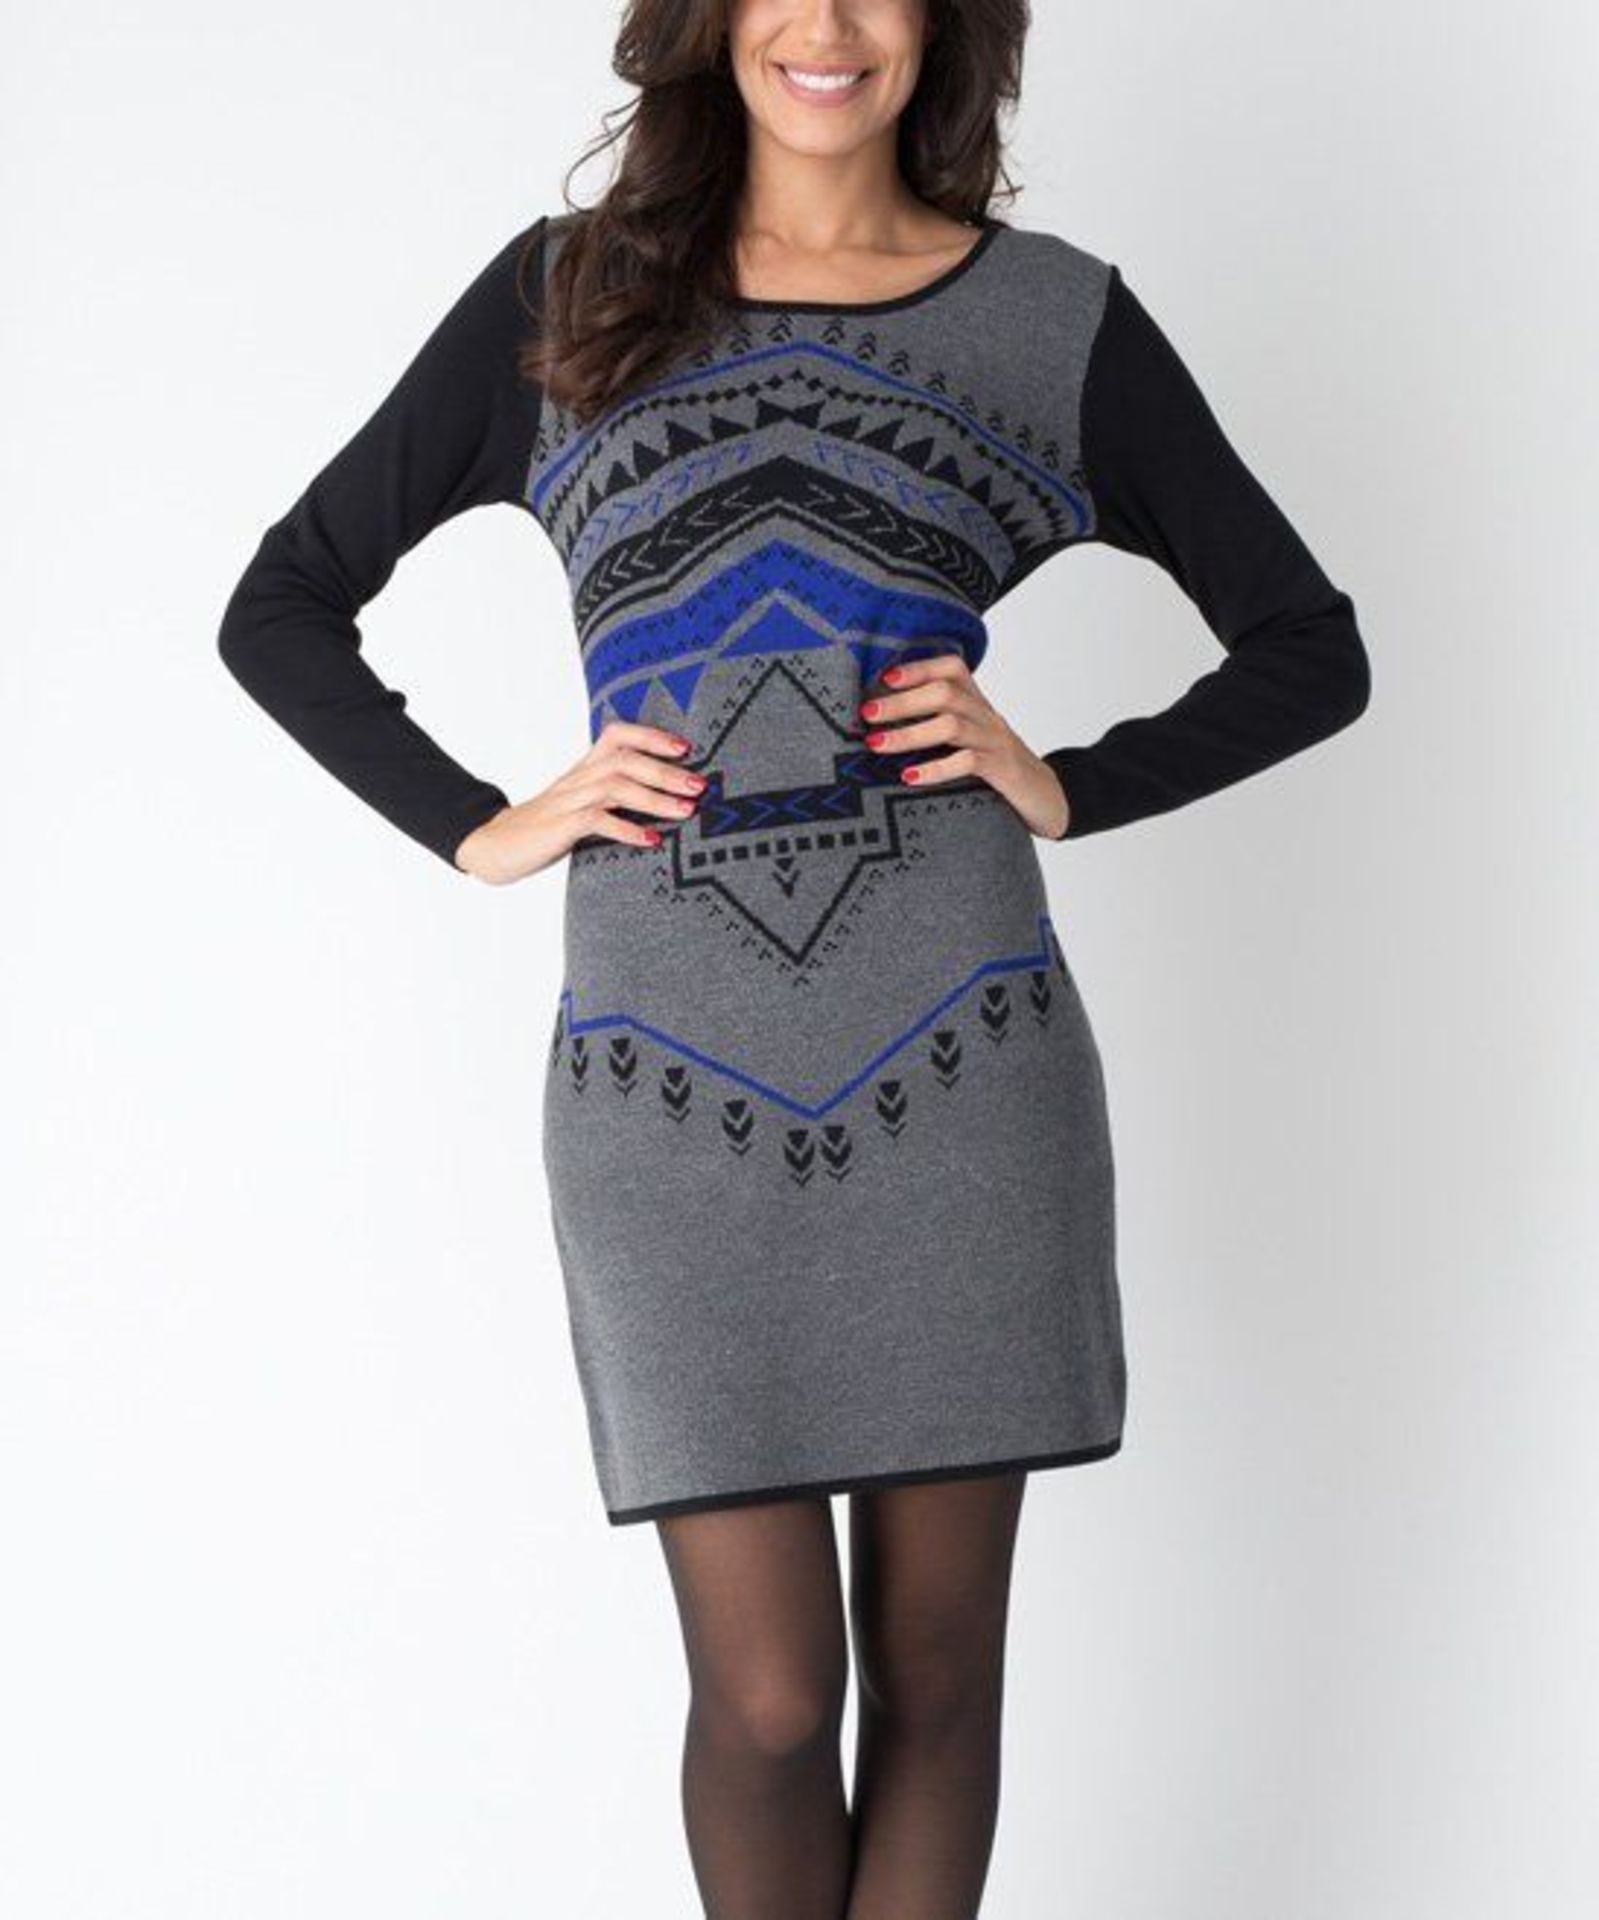 Yuka Paris Black & Blue Geometric Xena Dress (Uk Size 8:Us Size 4) (New with tags) [Ref: 30162802-